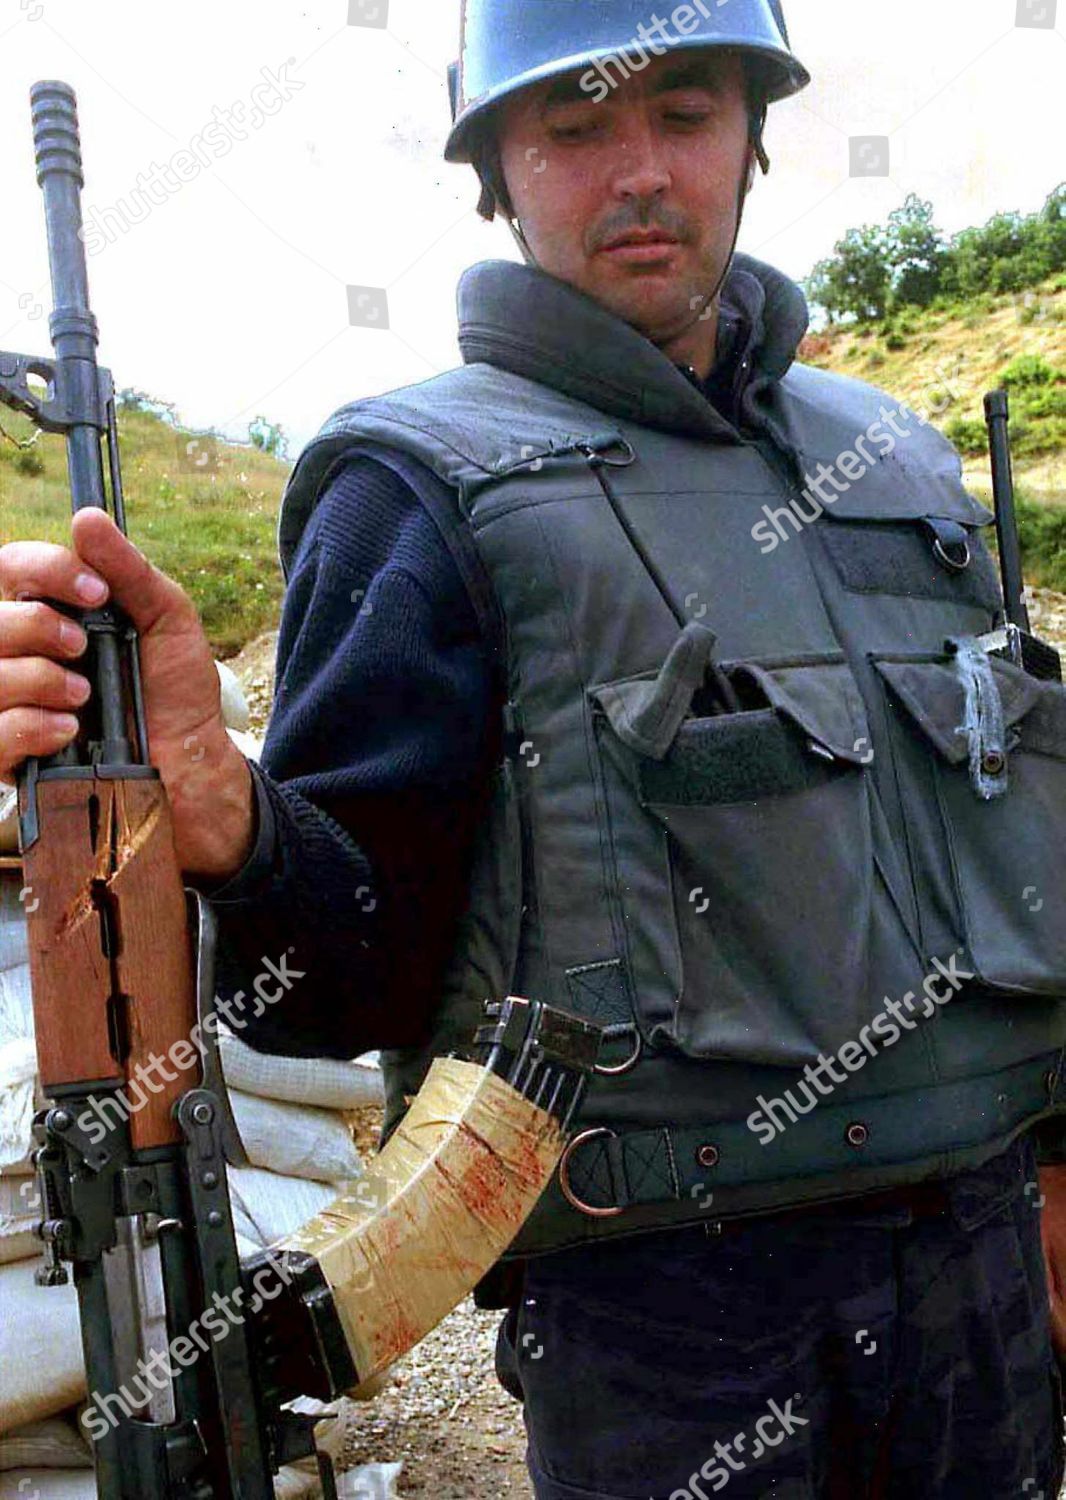 kosovo-bloodstained-gun-jul-1998-shutterstock-editorial-8794271a.jpg